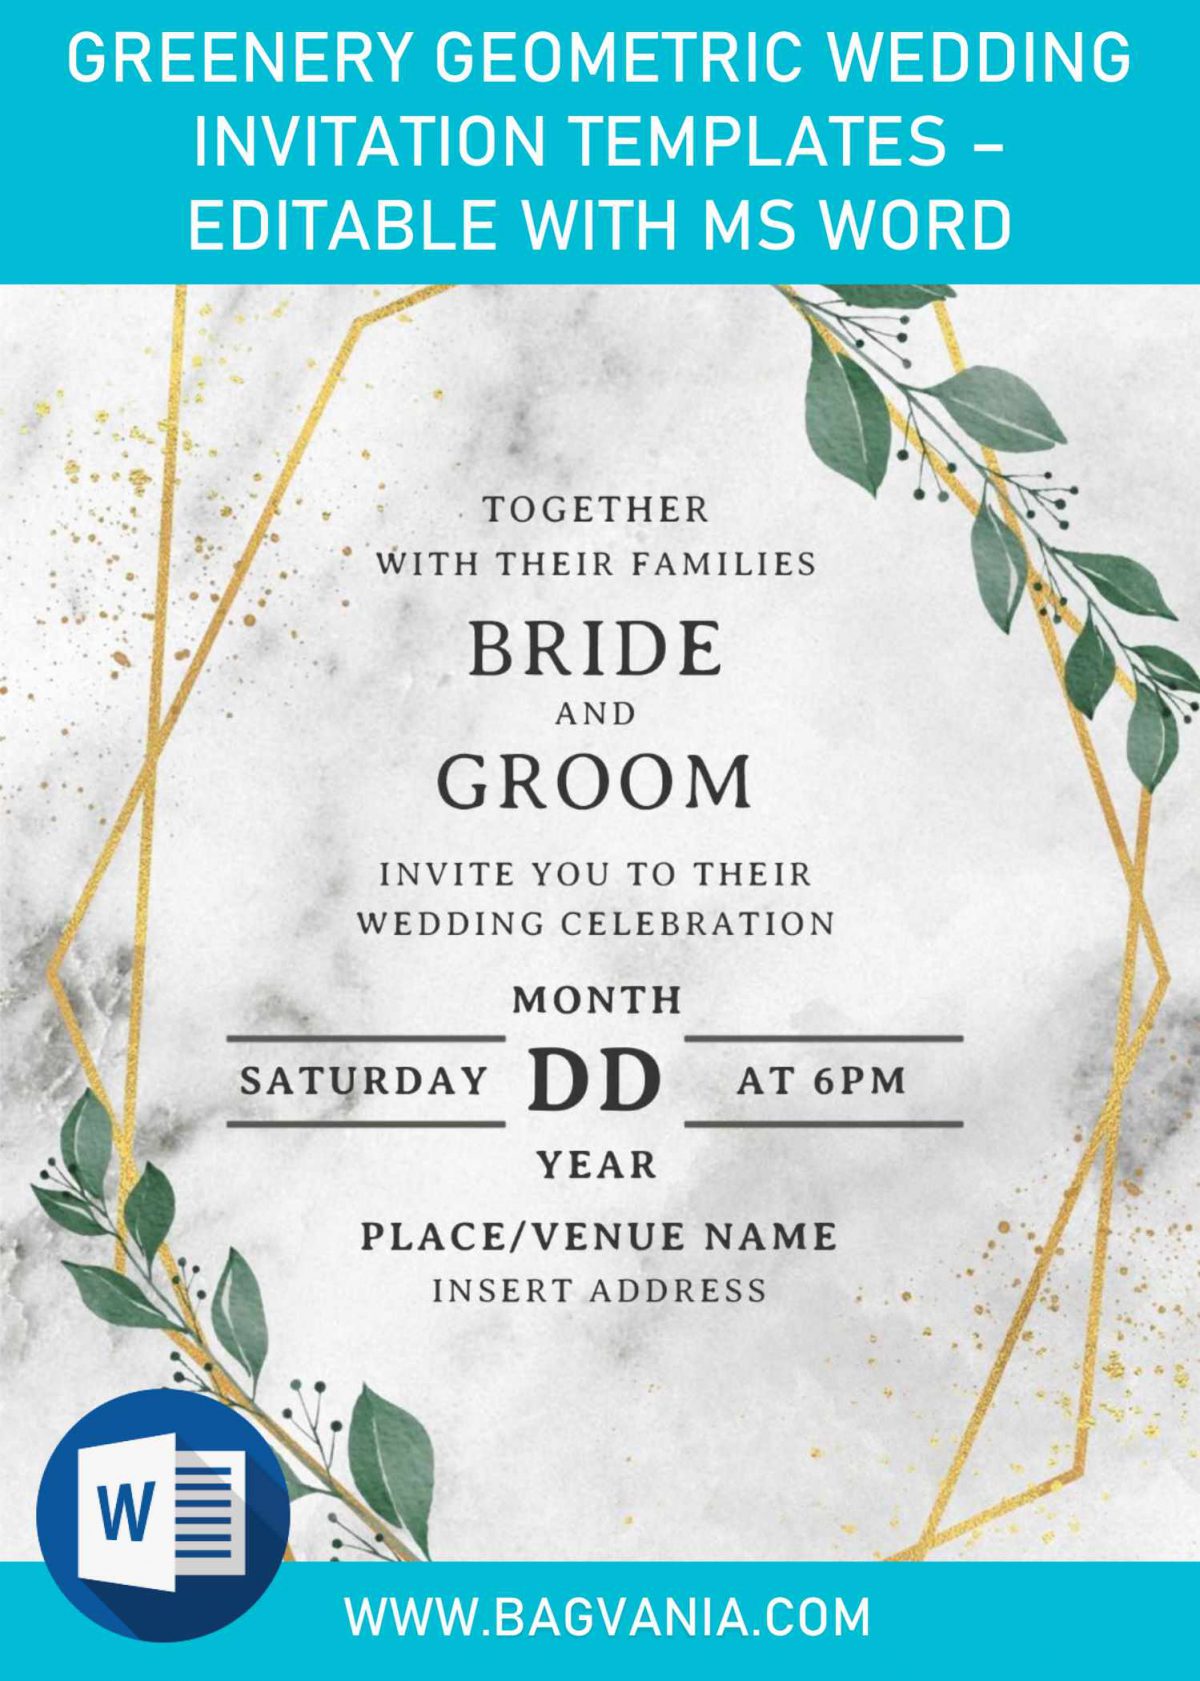 Greenery Geometric Wedding Invitation Templates - Editable With MS Word and has 